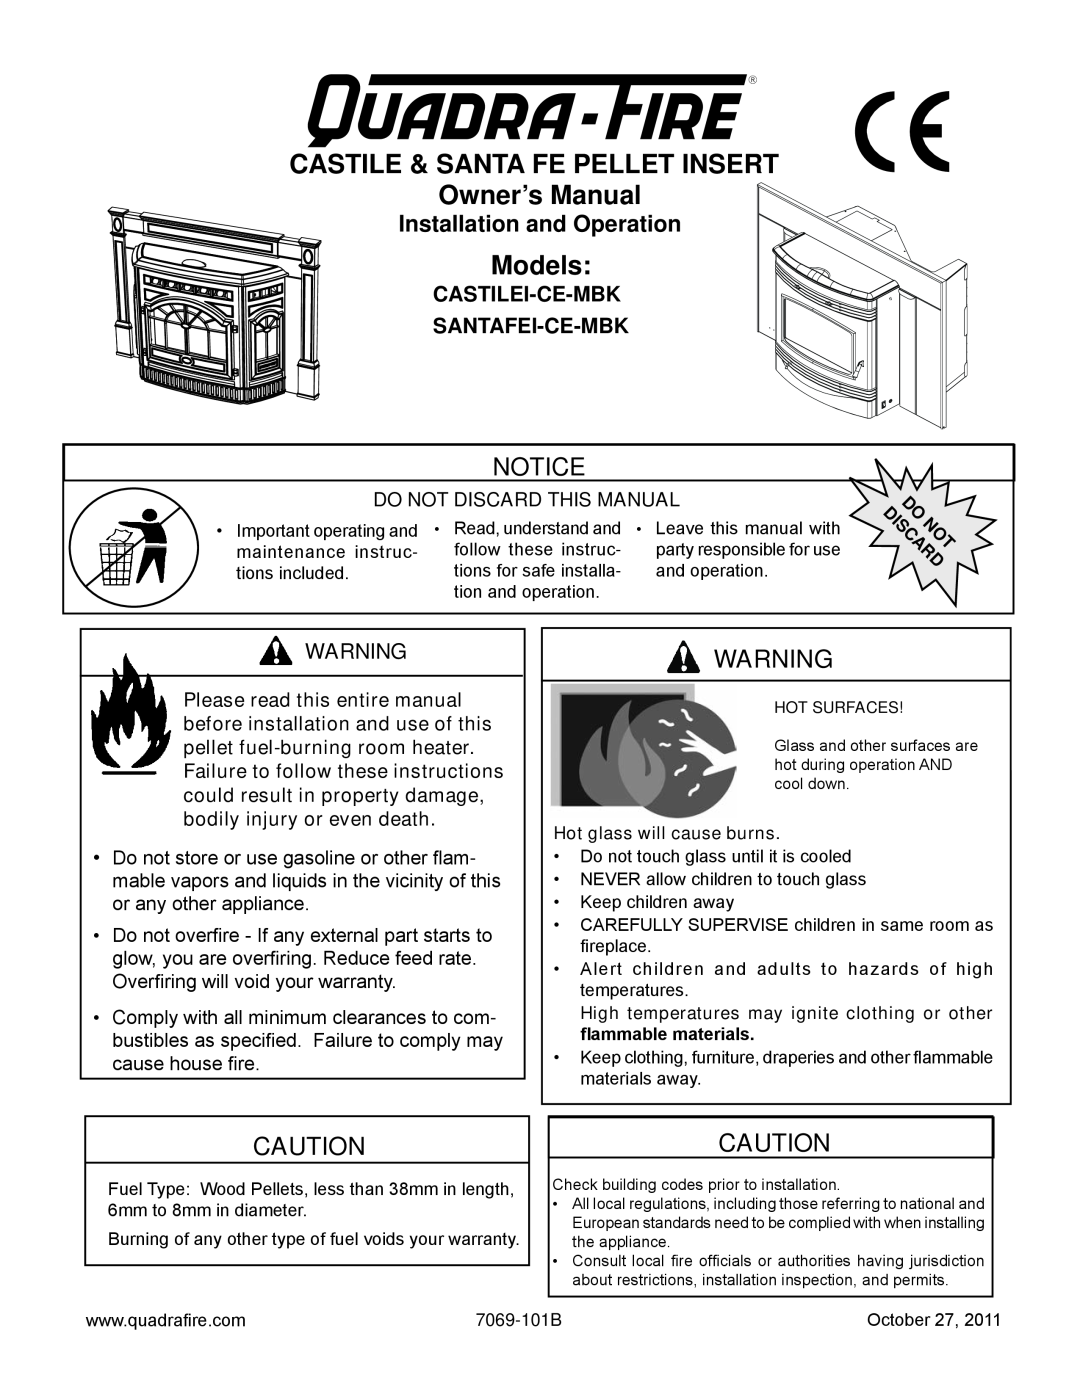 Quadra-Fire CASTILEI-CE-MBK owner manual Installation and Operation, Castilei-Ce-Mbk Santafei-Ce-Mbk, Models 